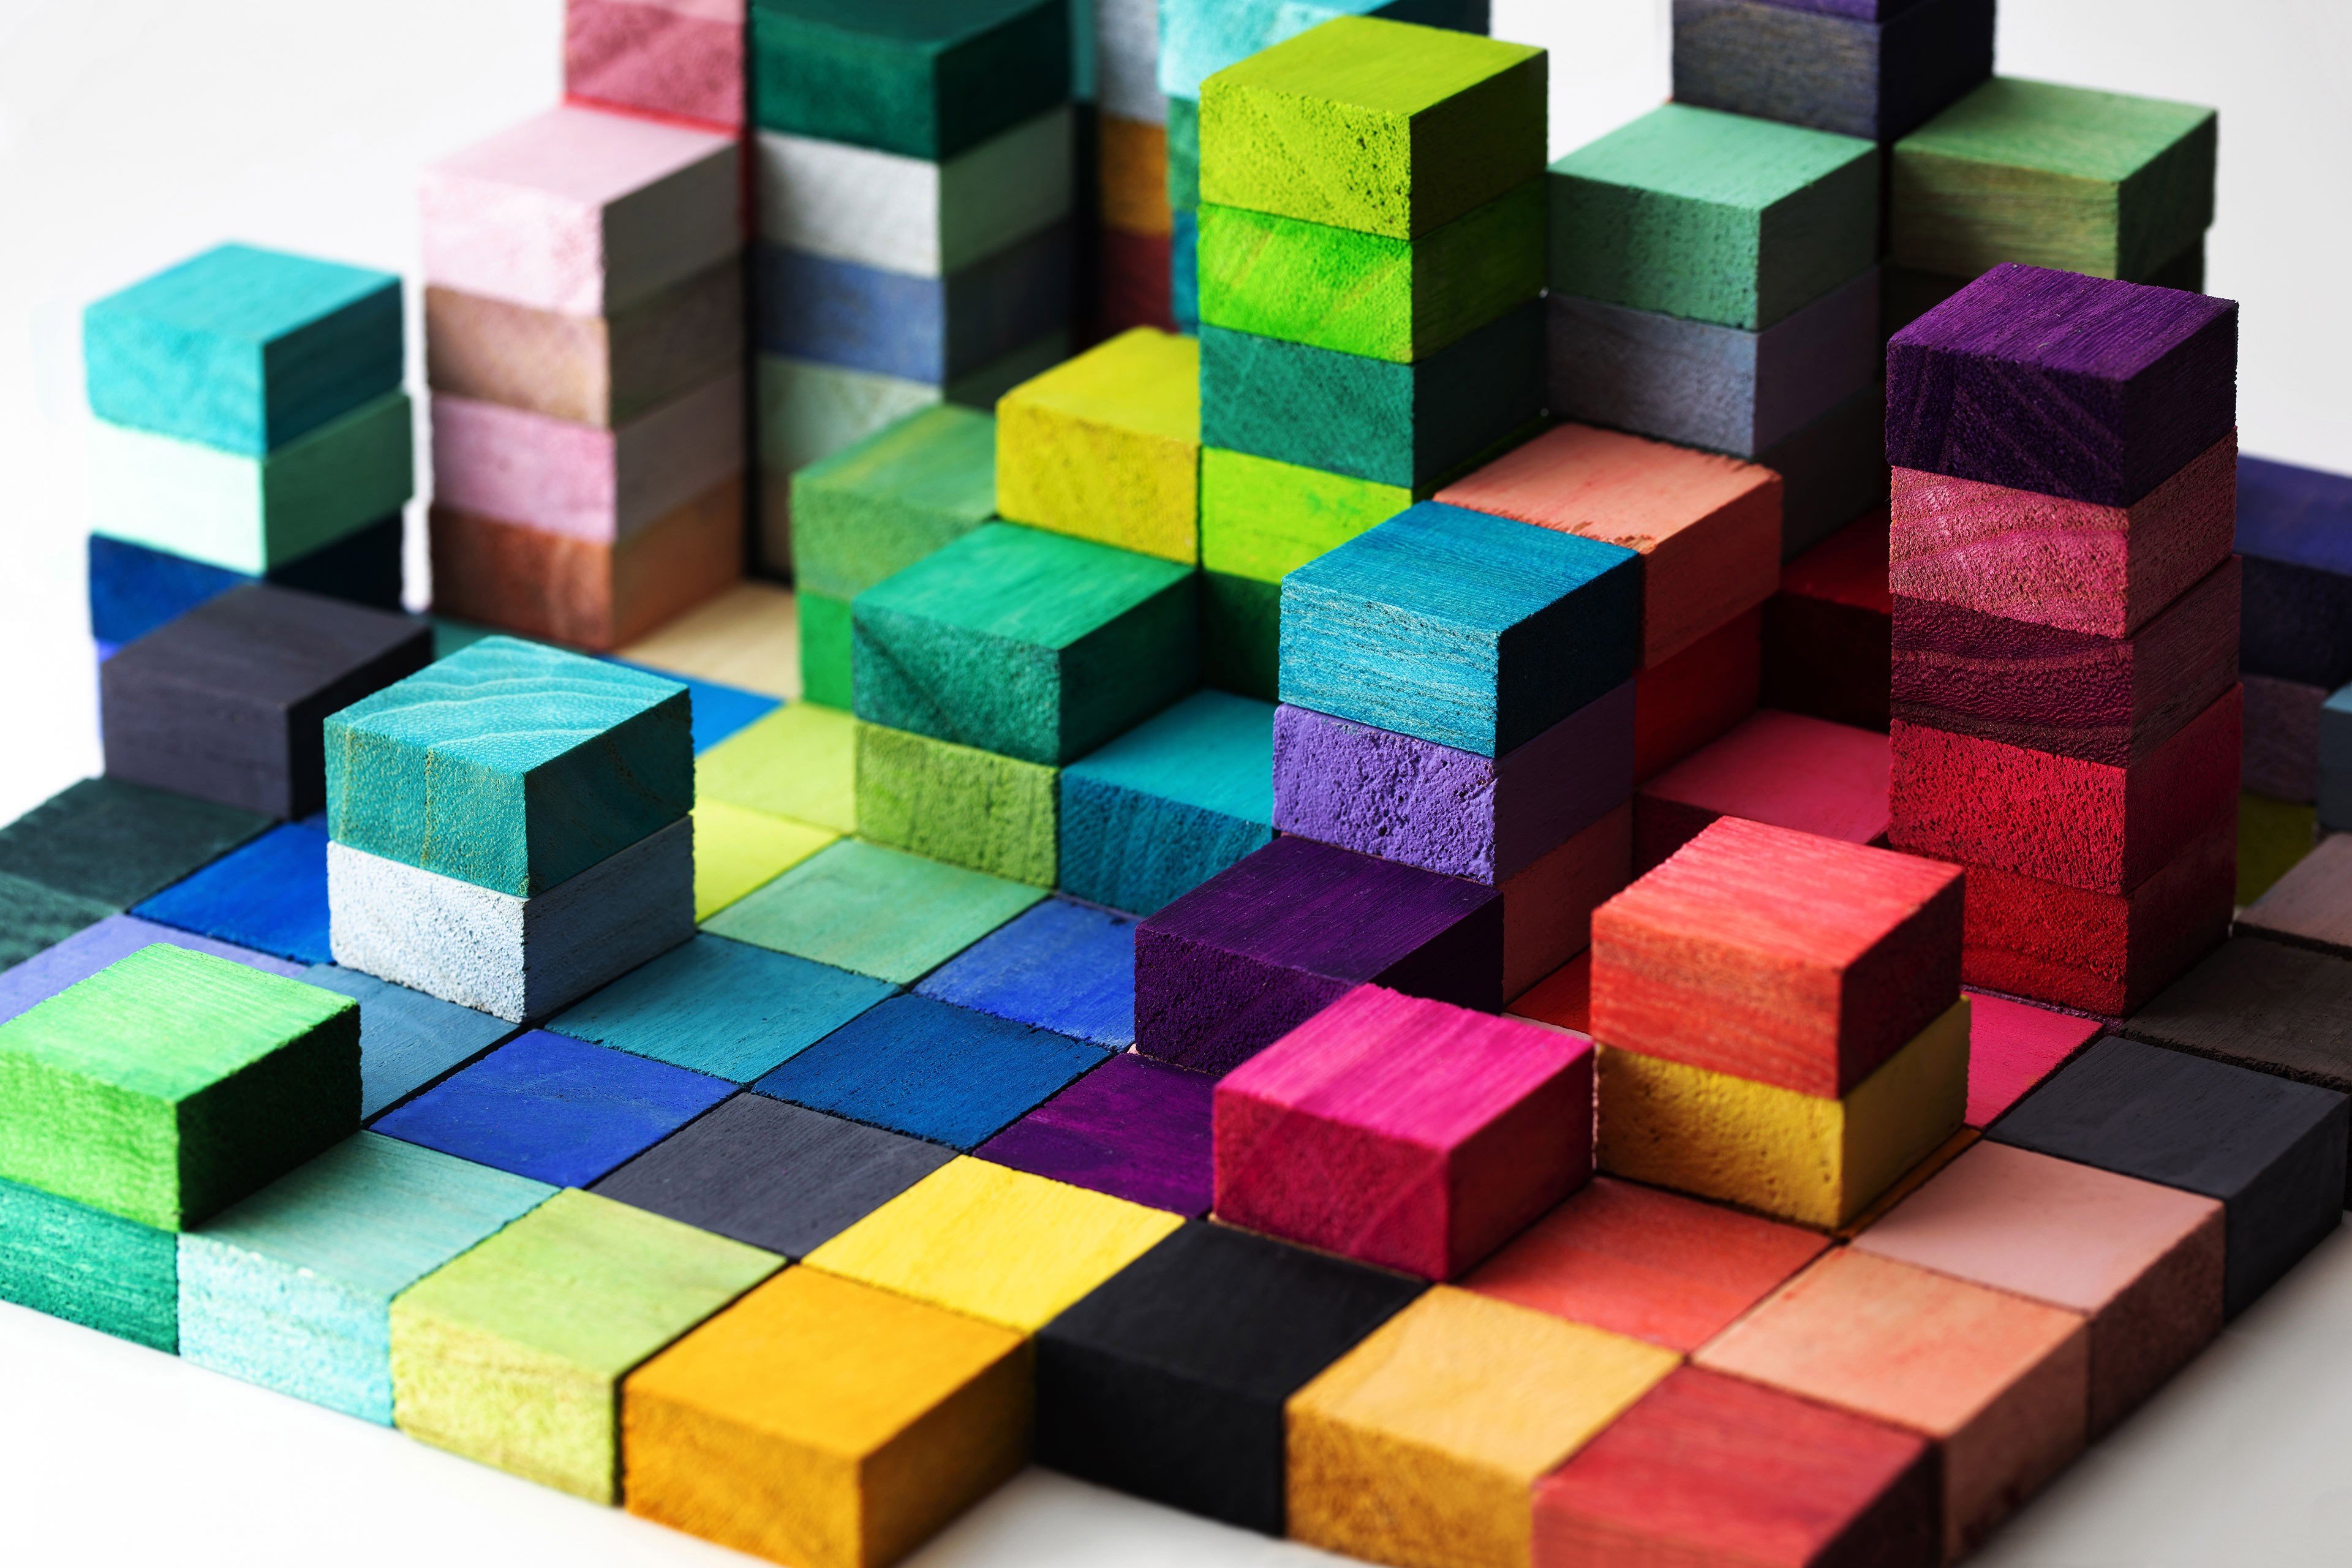 Multi-colored building blocks